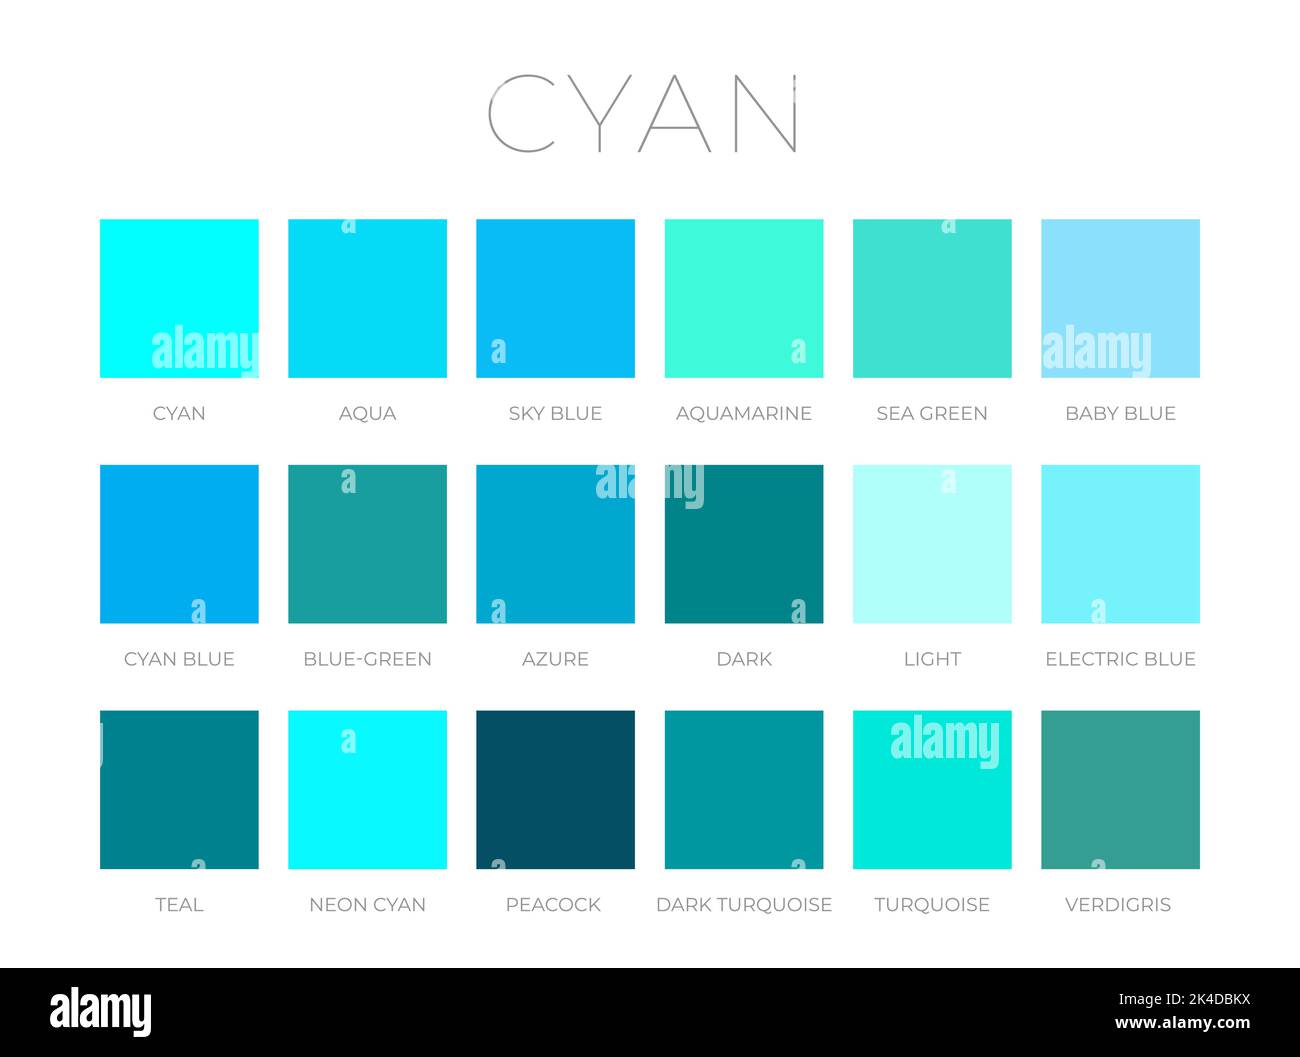 1. "Cyan Hair Dye: Light Blue Shades for a Bold Look" - wide 8